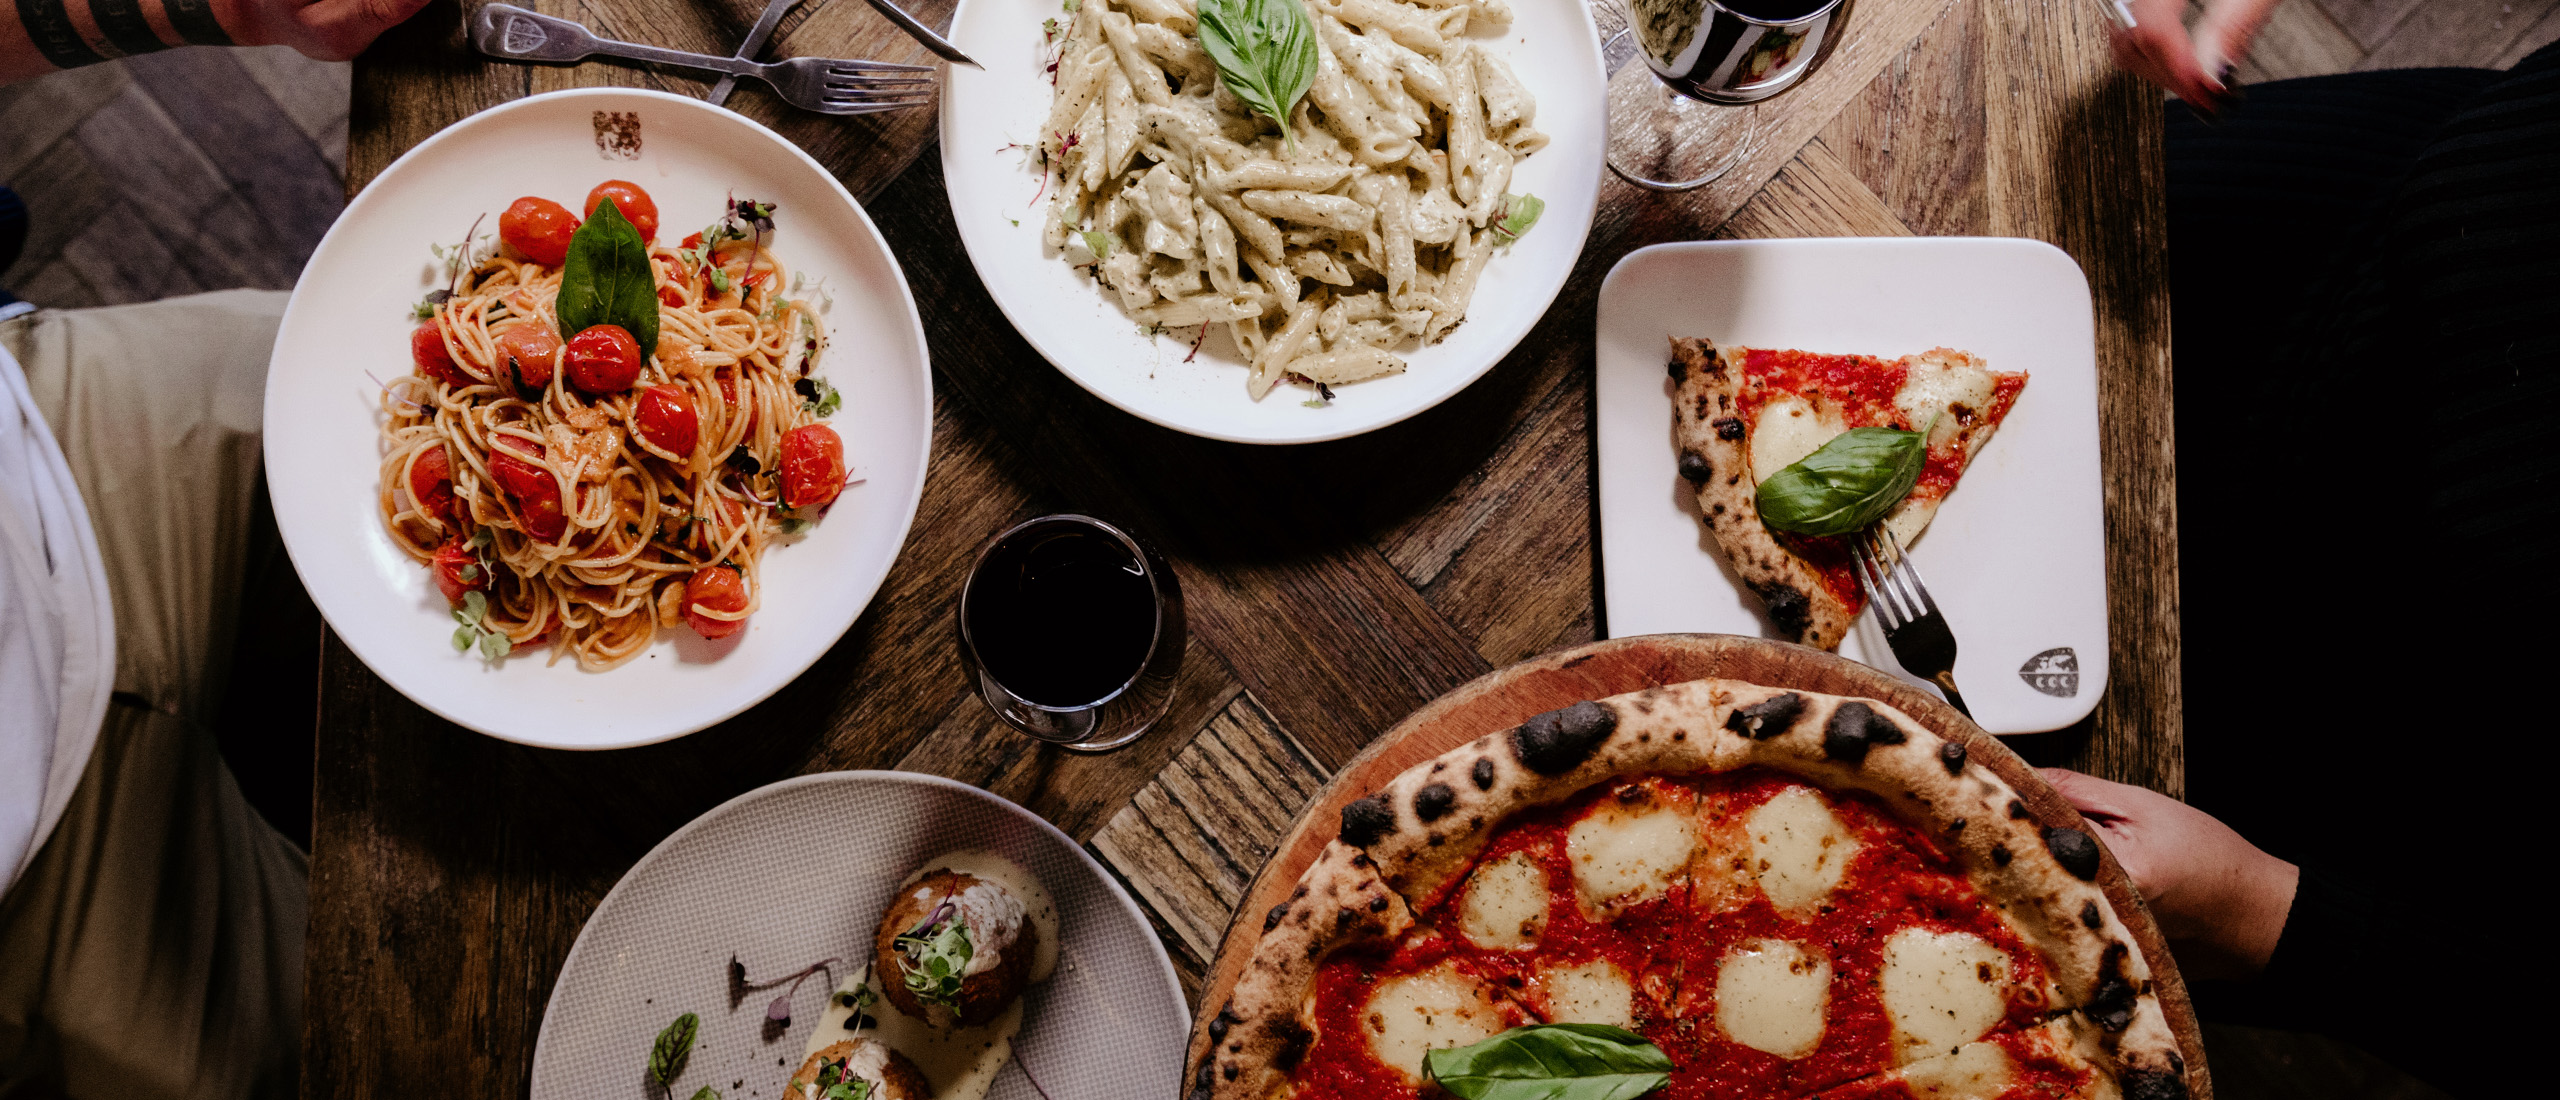 Italian Restaurant - Sydney, Newcastle, Wollongong, Melbourne, Perth ...